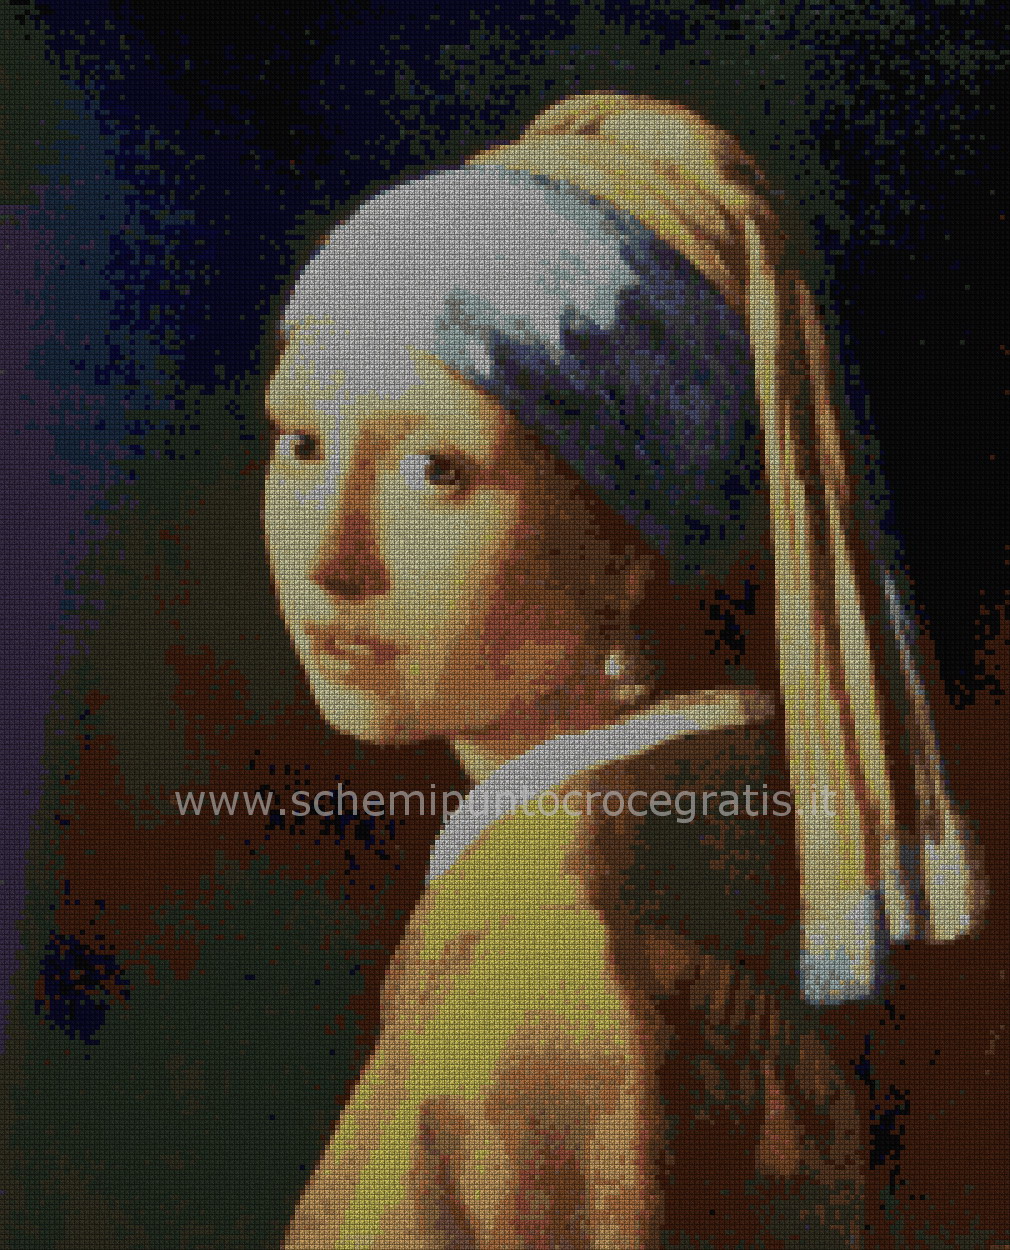 pittori_classici/vermeer/vermeer_01s.jpg